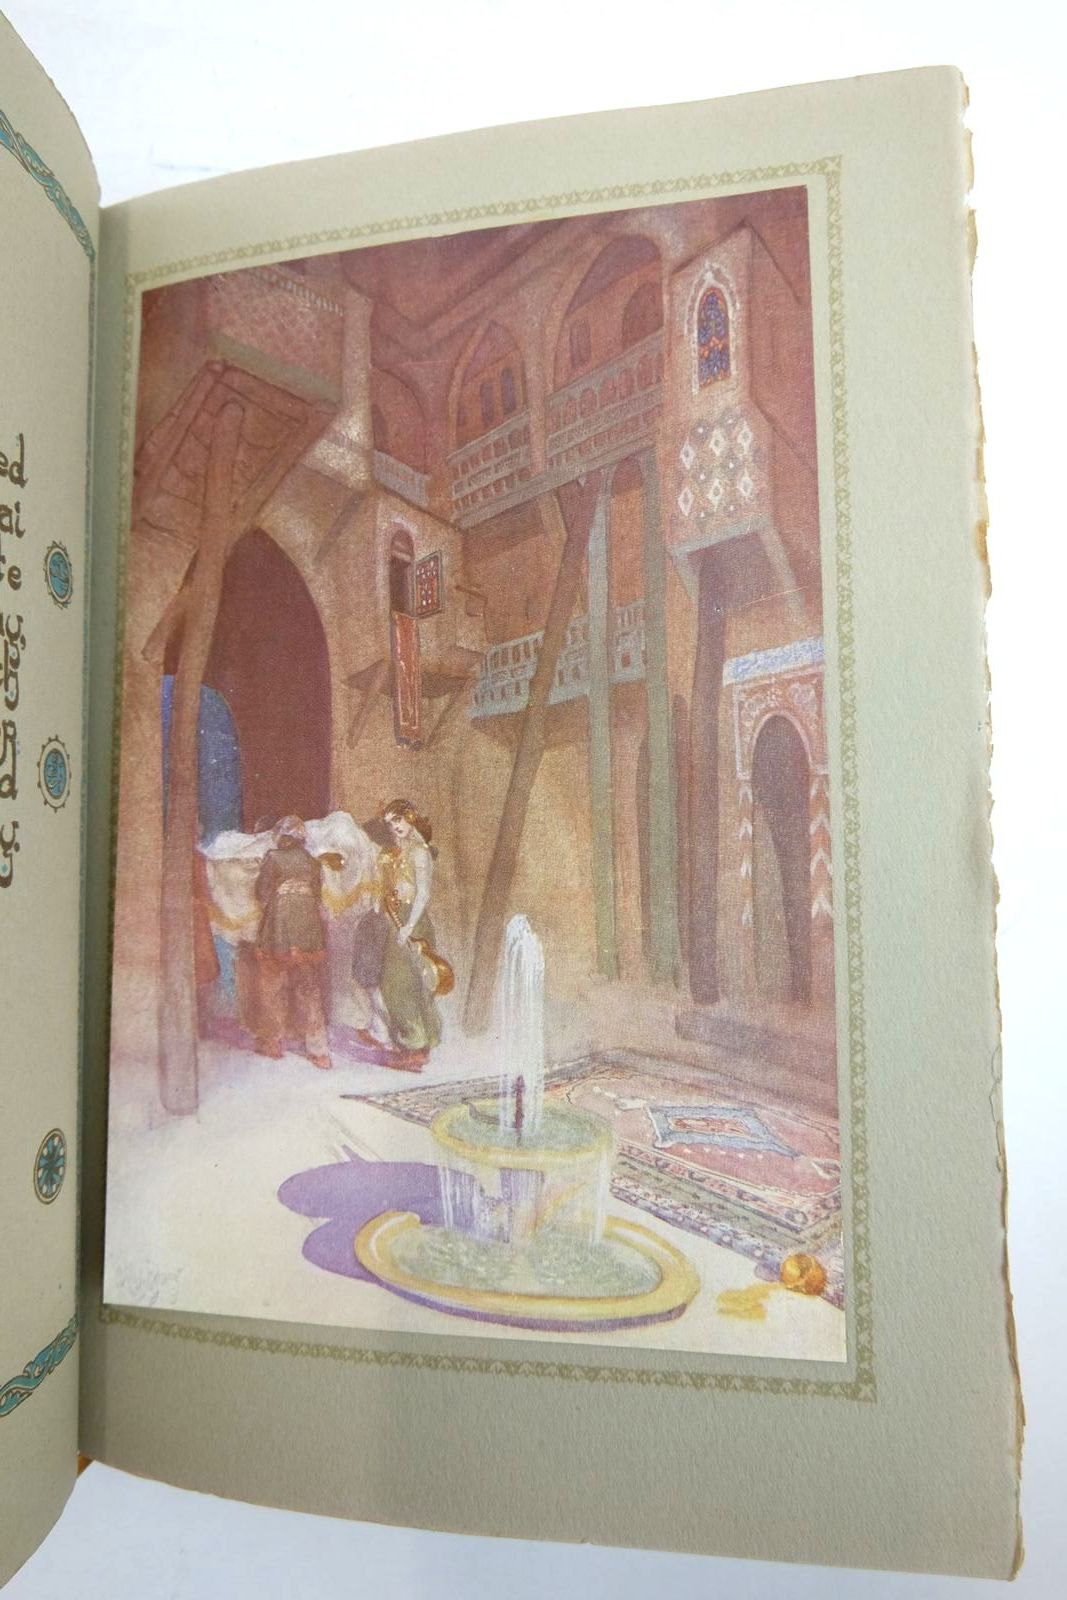 Photo of RUBAIYAT OF OMAR KHAYYAM written by Khayyam, Omar
Fitzgerald, Edward illustrated by Pogany, Willy published by George G. Harrap & Co. Ltd. (STOCK CODE: 2134714)  for sale by Stella & Rose's Books